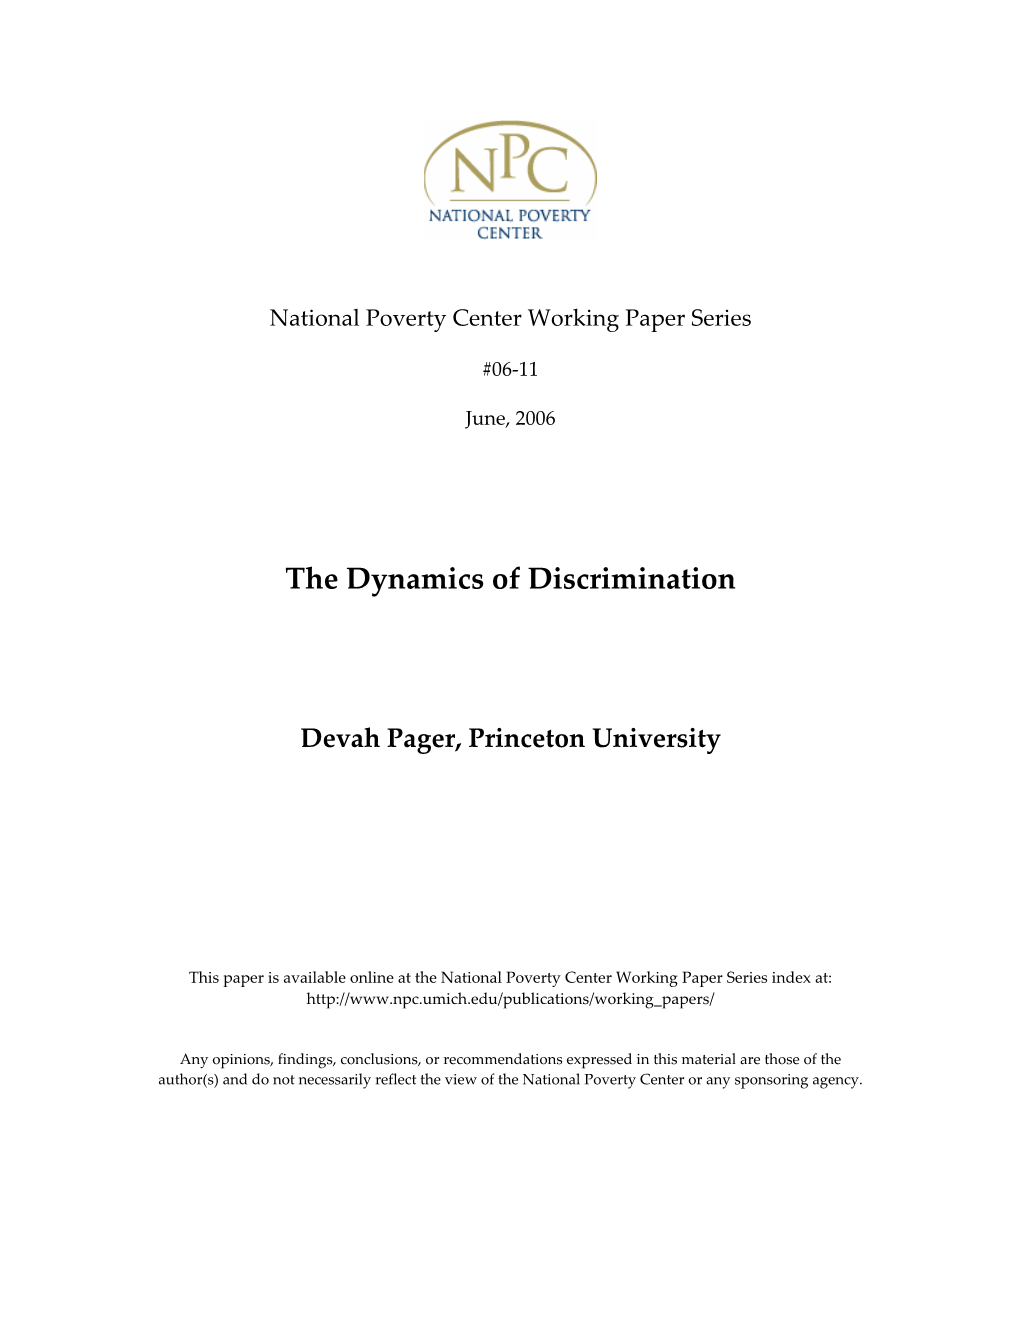 Discrimination Paper